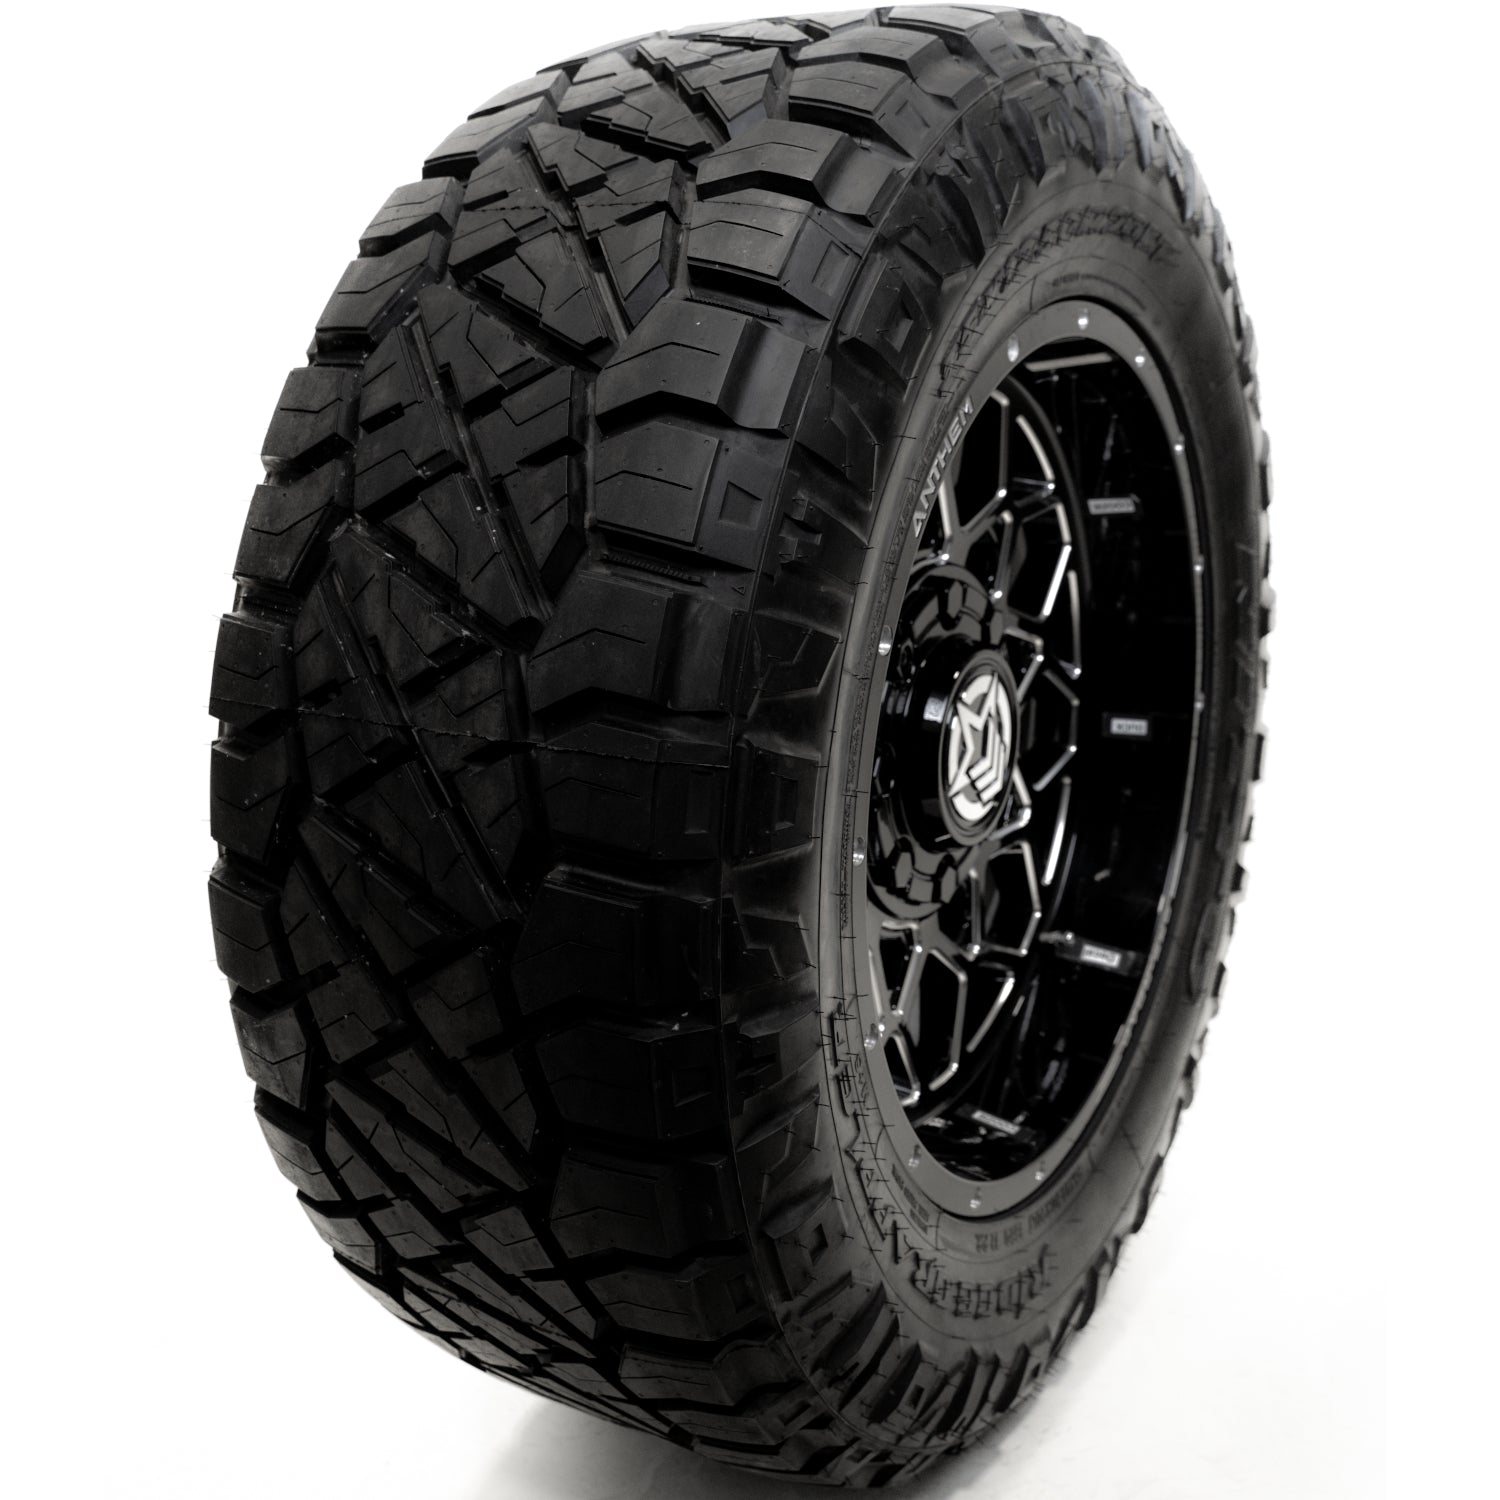 NITTO RIDGE GRAPPLER 275/50R22XL (32.9X10.8R 22) Tires